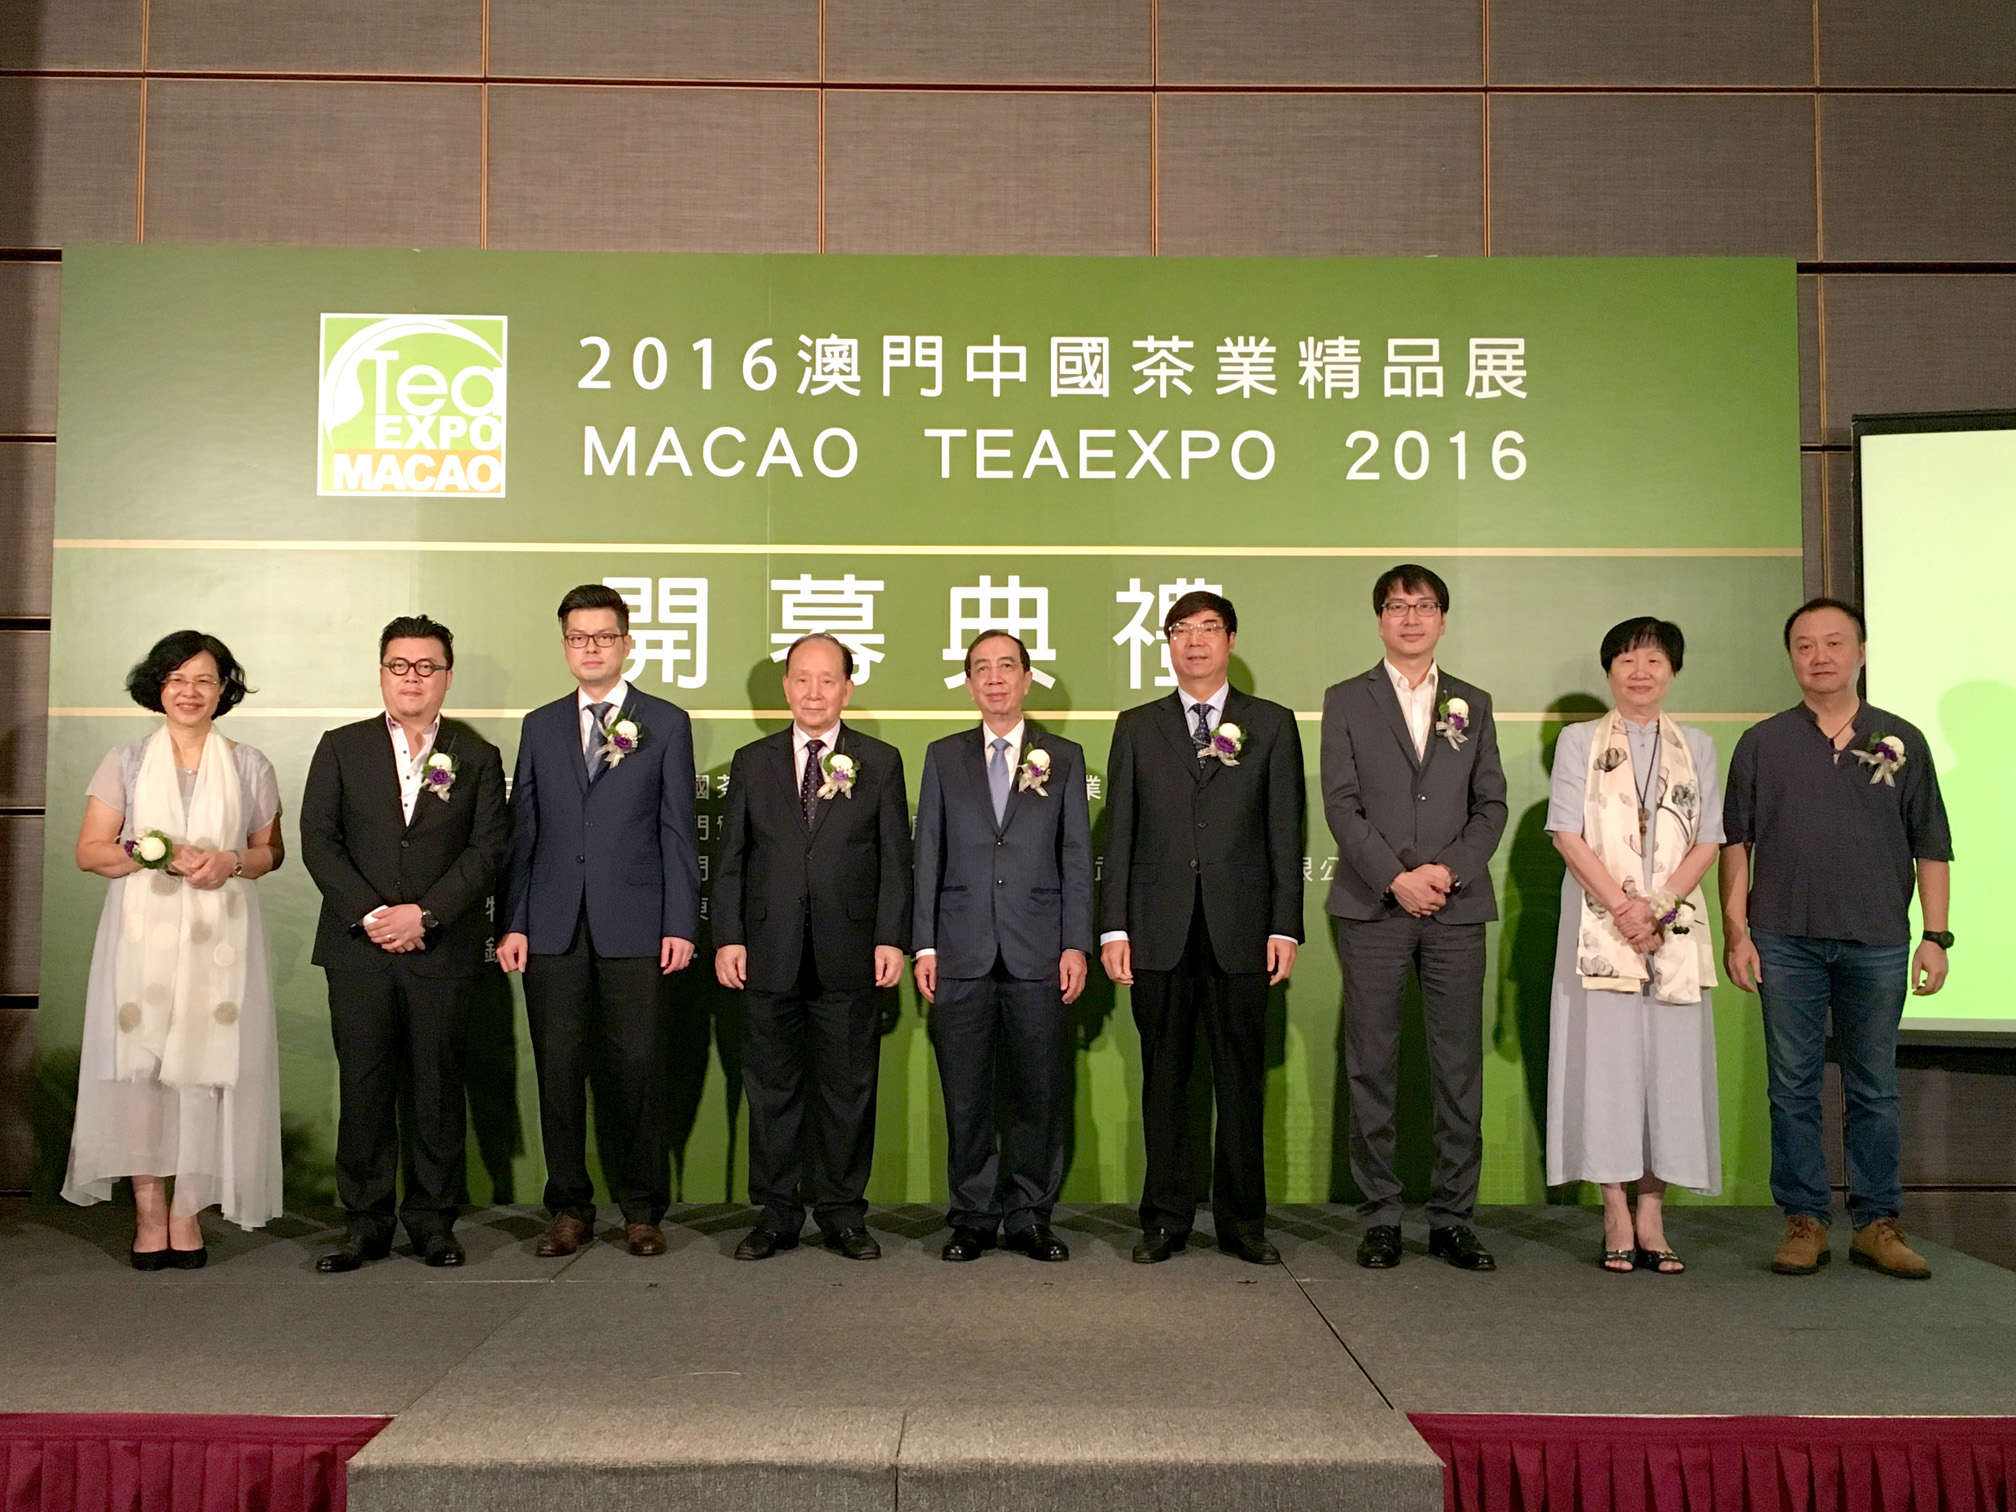 IPIM attends the Macao Tea Expo (18 June 2016)